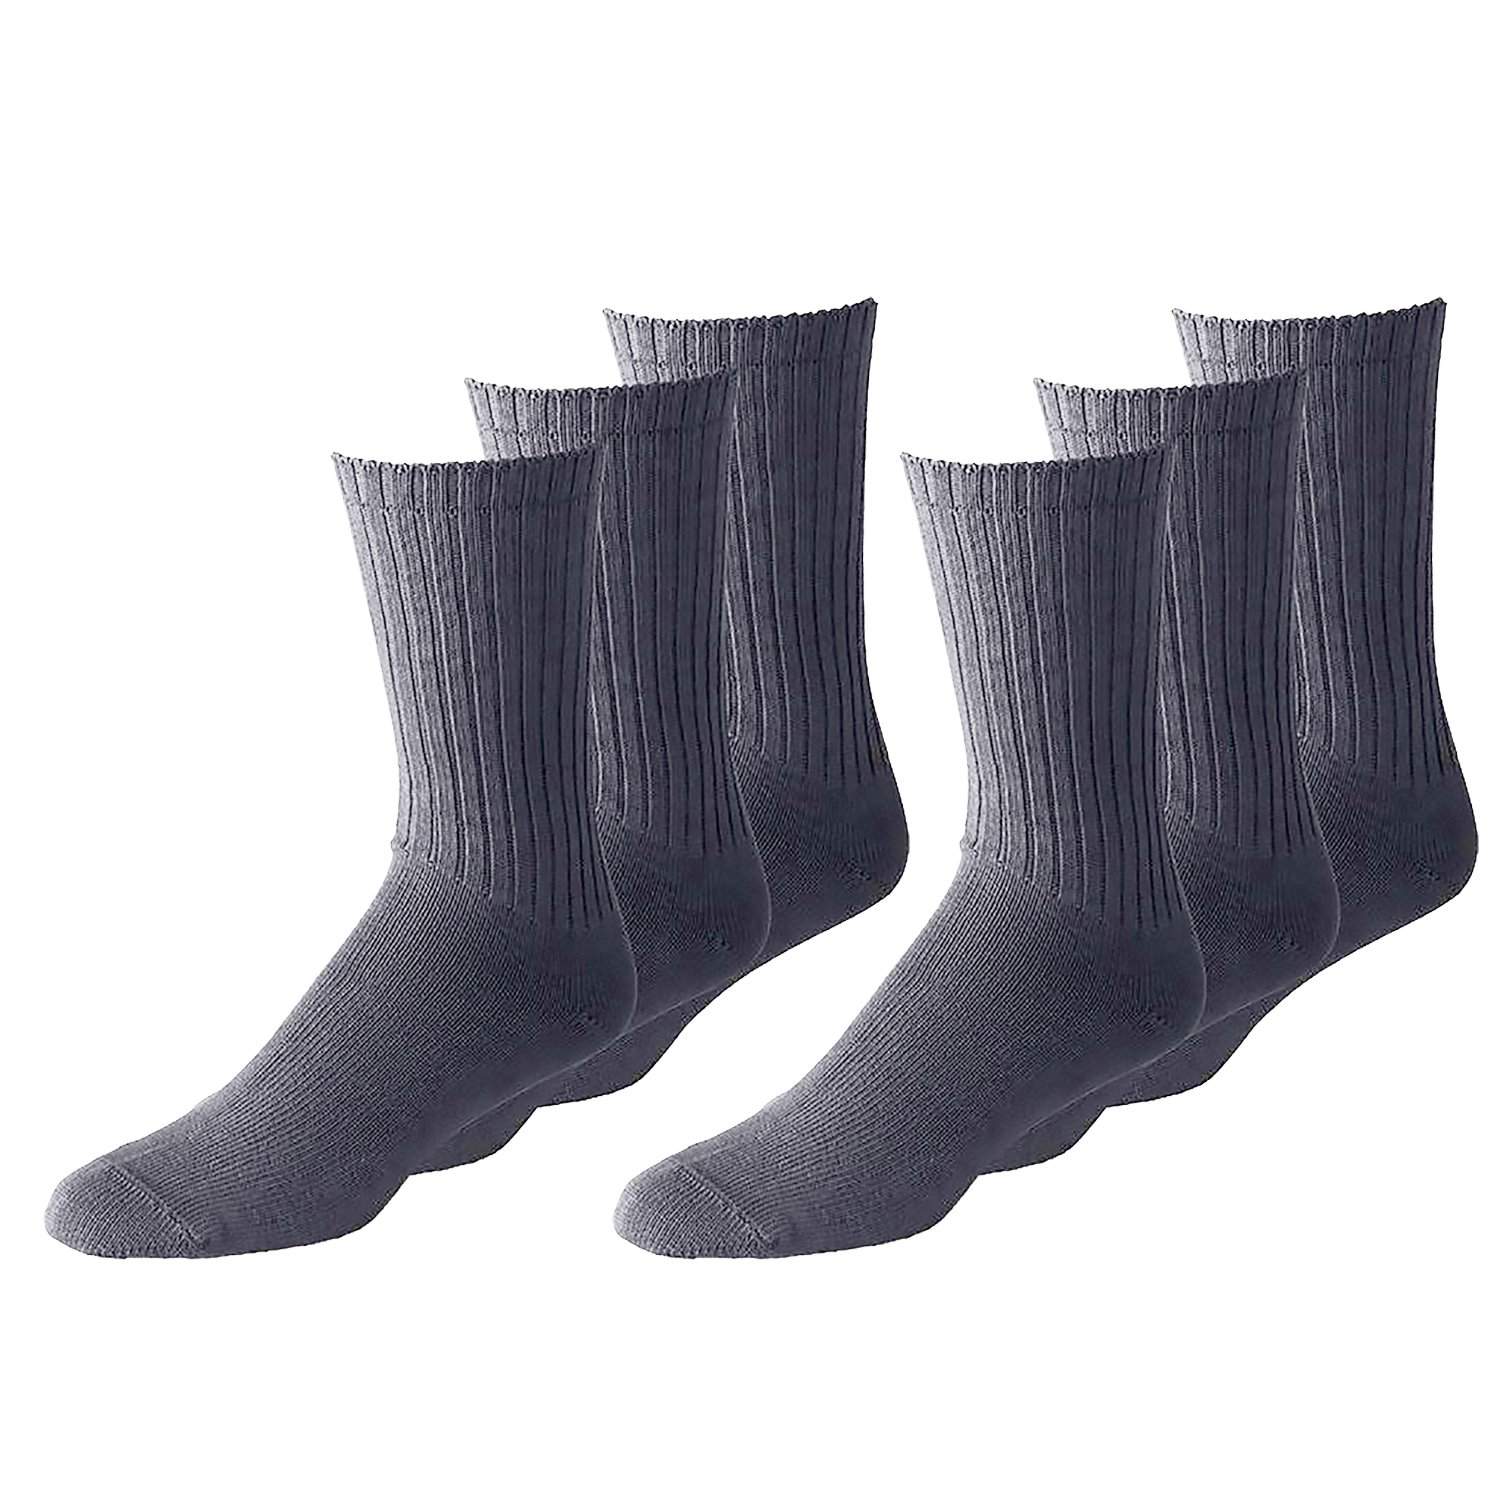 144 Pairs Qraftsy Men's Athletic Crew Socks - Bulk Wholesale Packs - Any Shoe Size